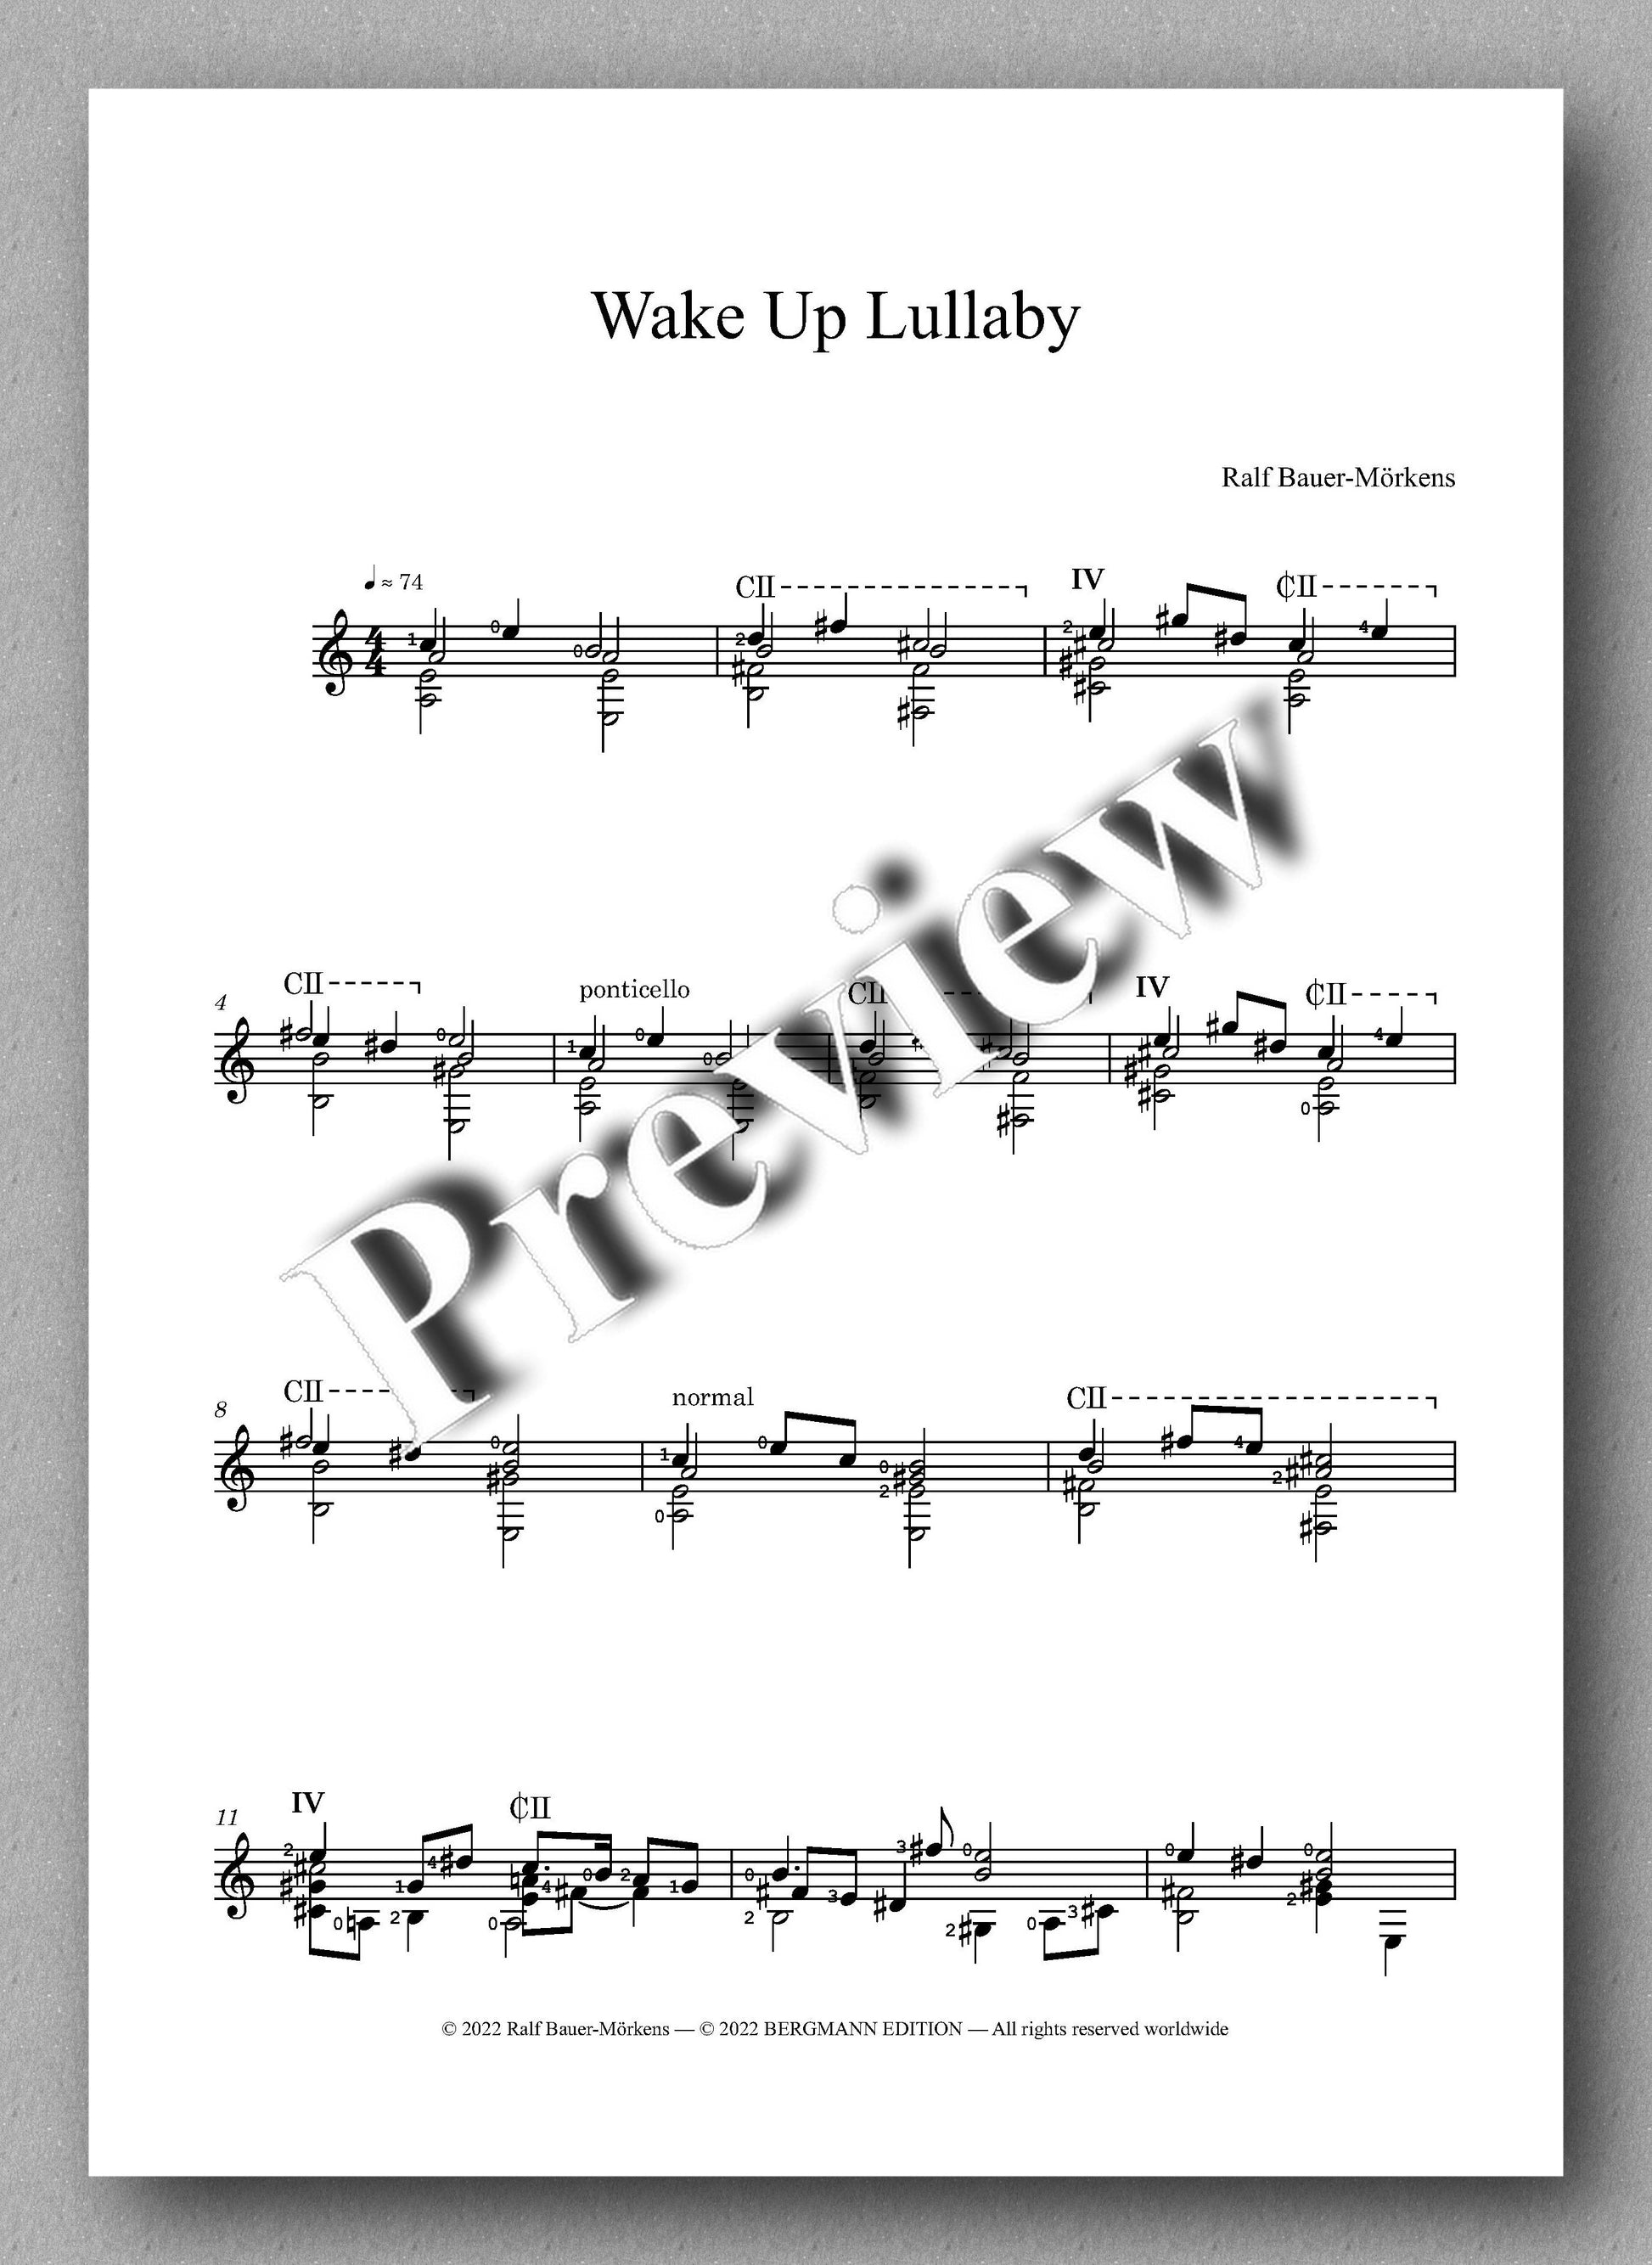 Wake Up Lullaby by Ralf Bauer-Mörkens - Music score